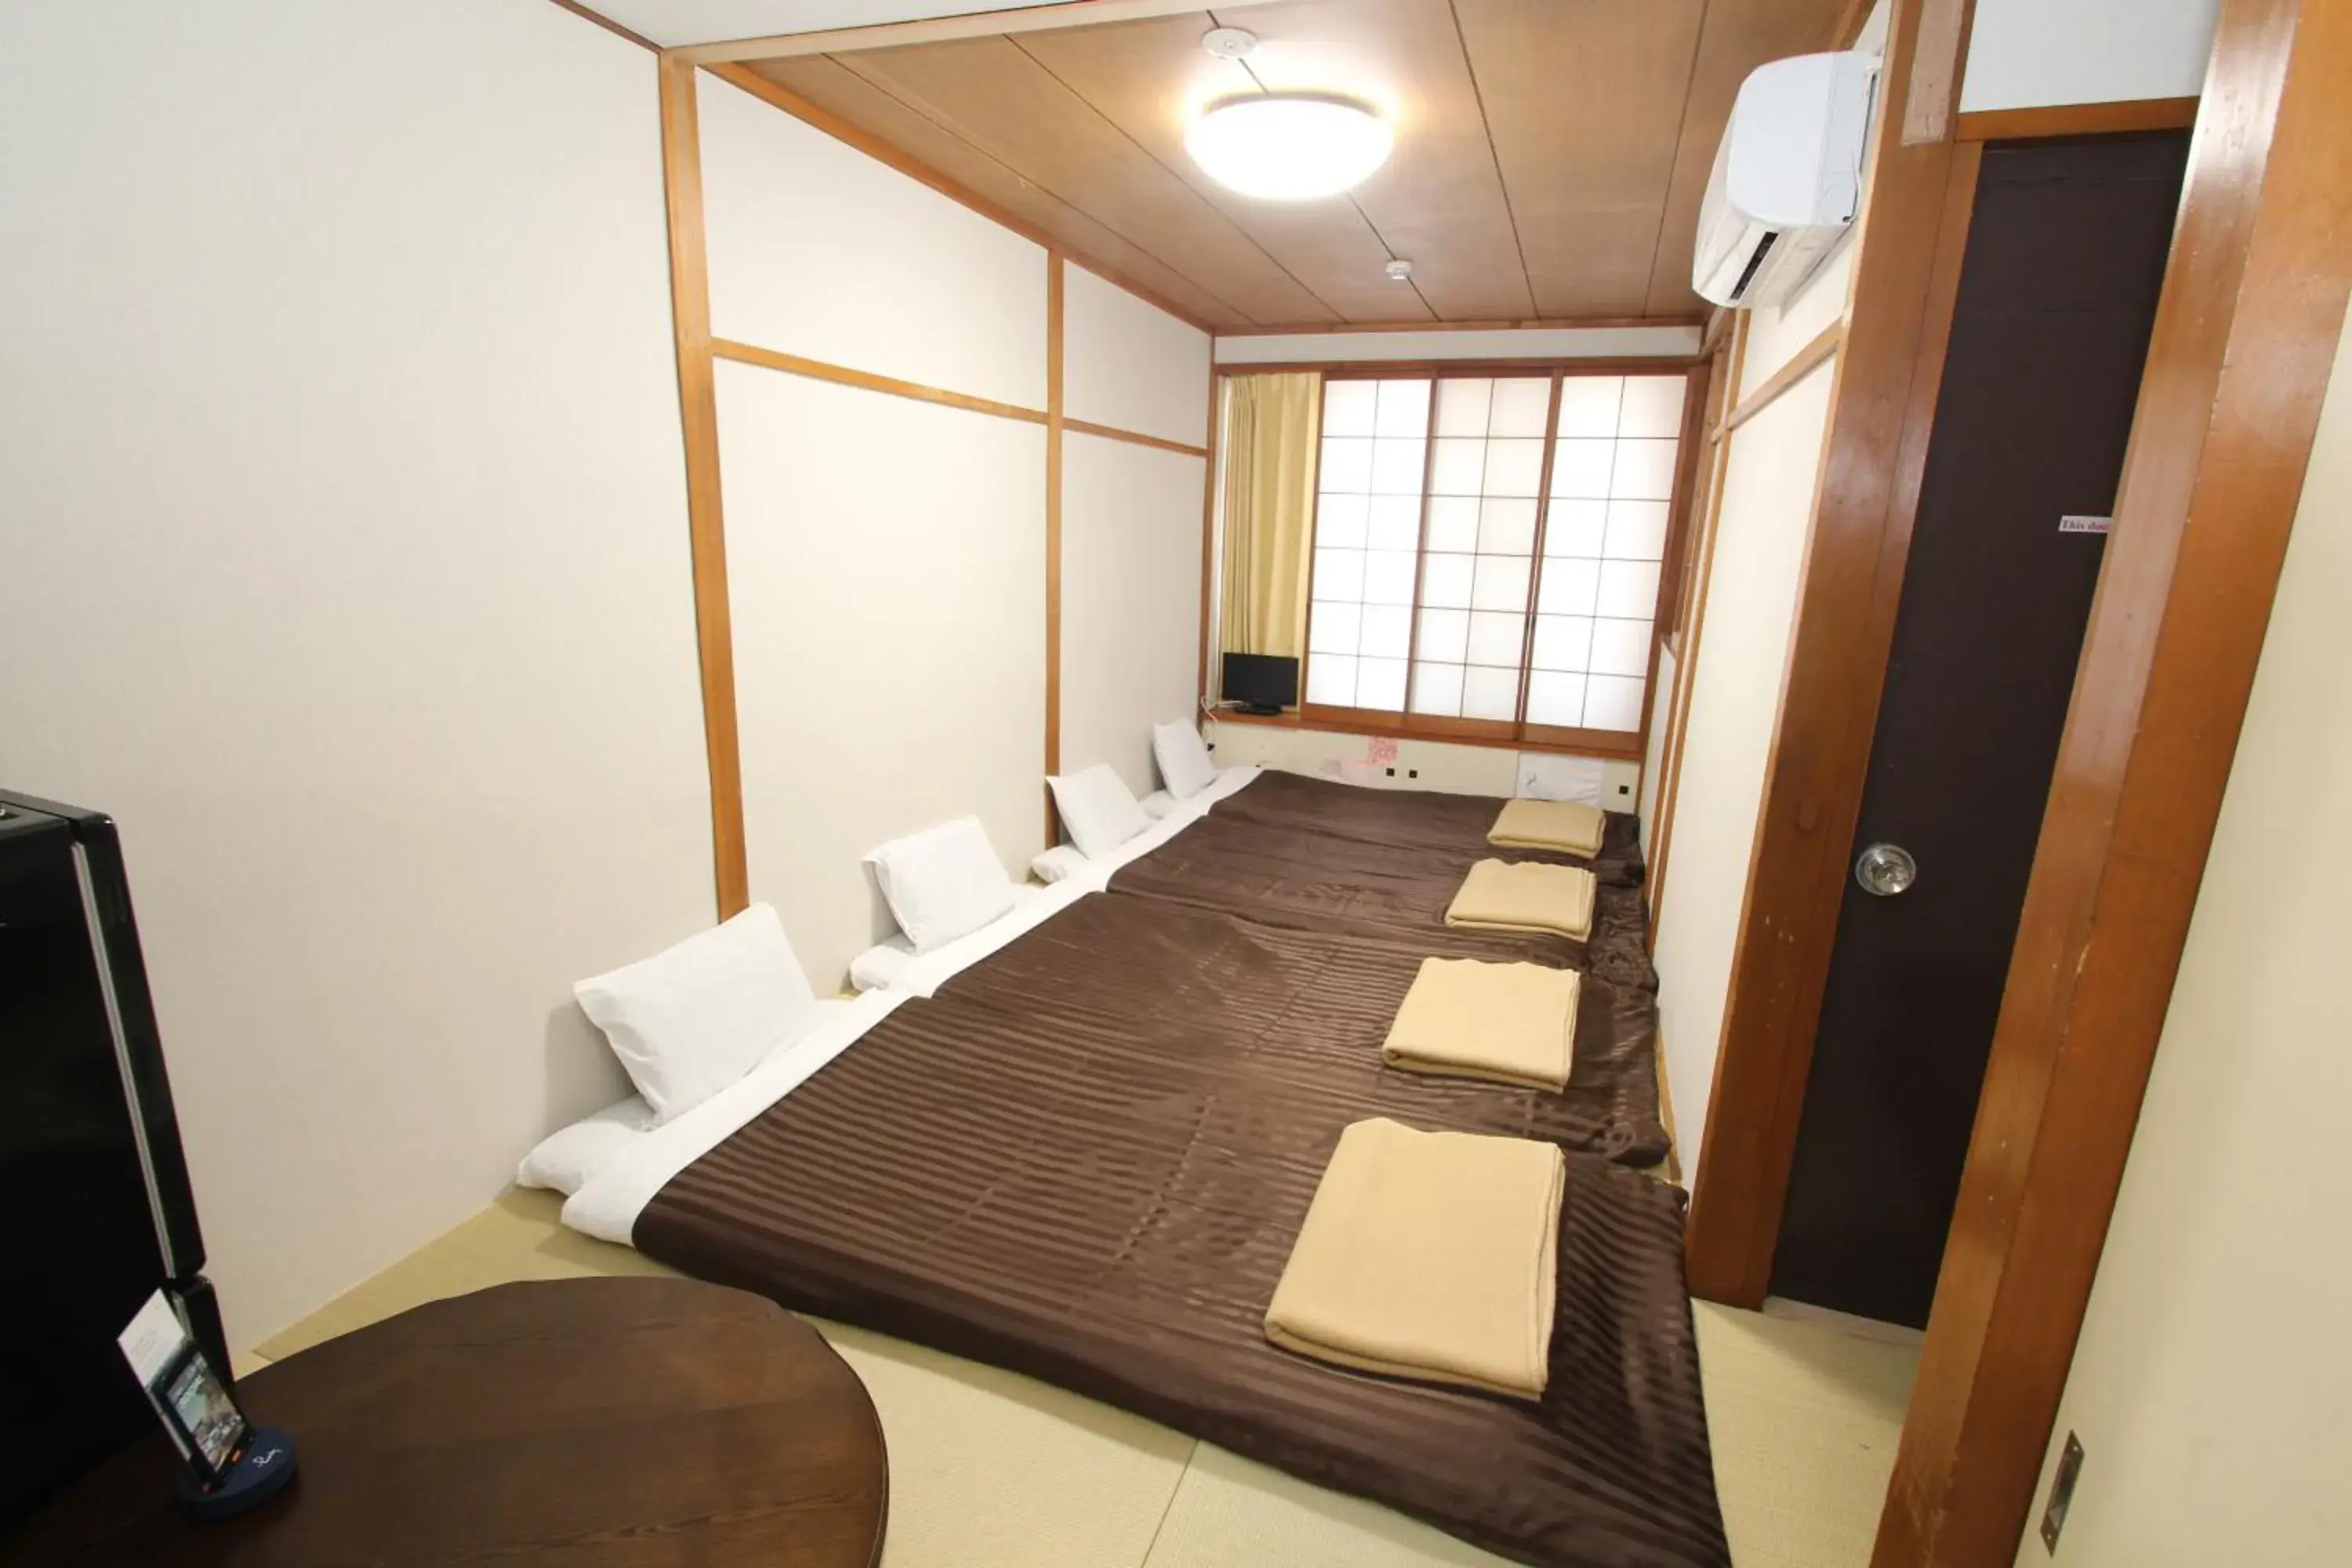 Photo of the whole room in Sakura Hotel Hatagaya